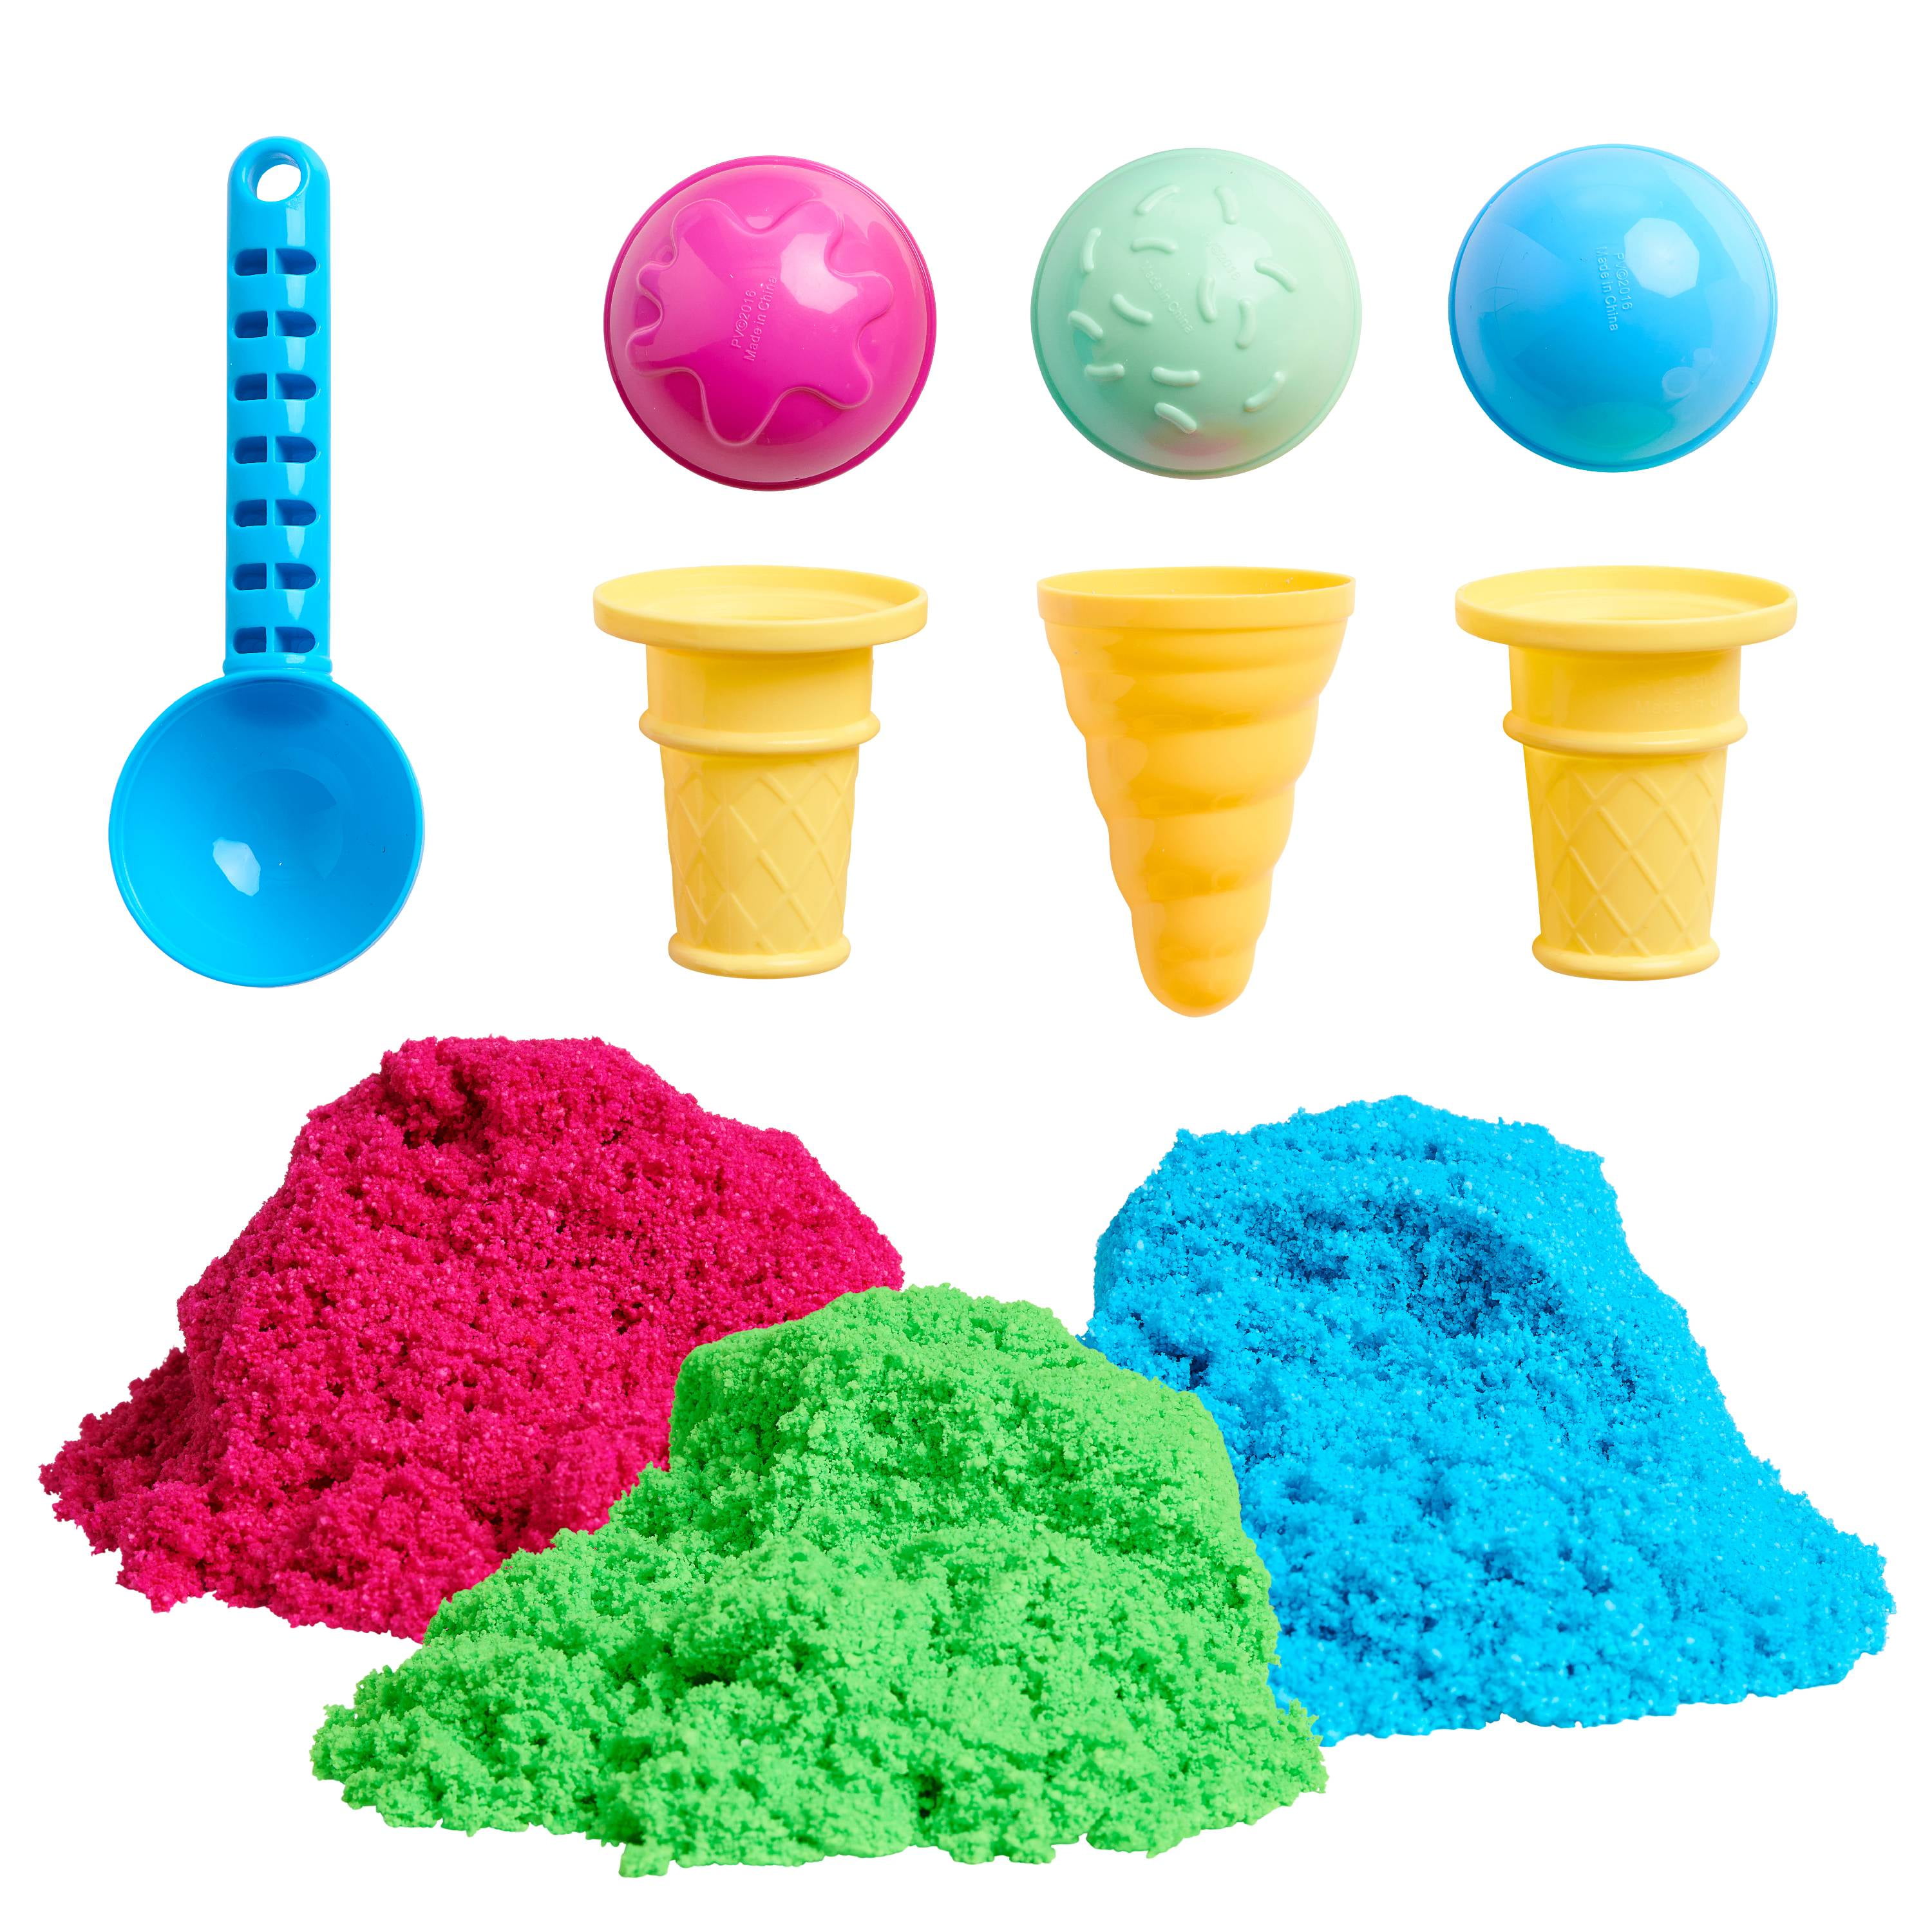 Fake Ice Cream Swirl & Ice Cream Scoop - Playcode3 Air Dry Foam Clay 